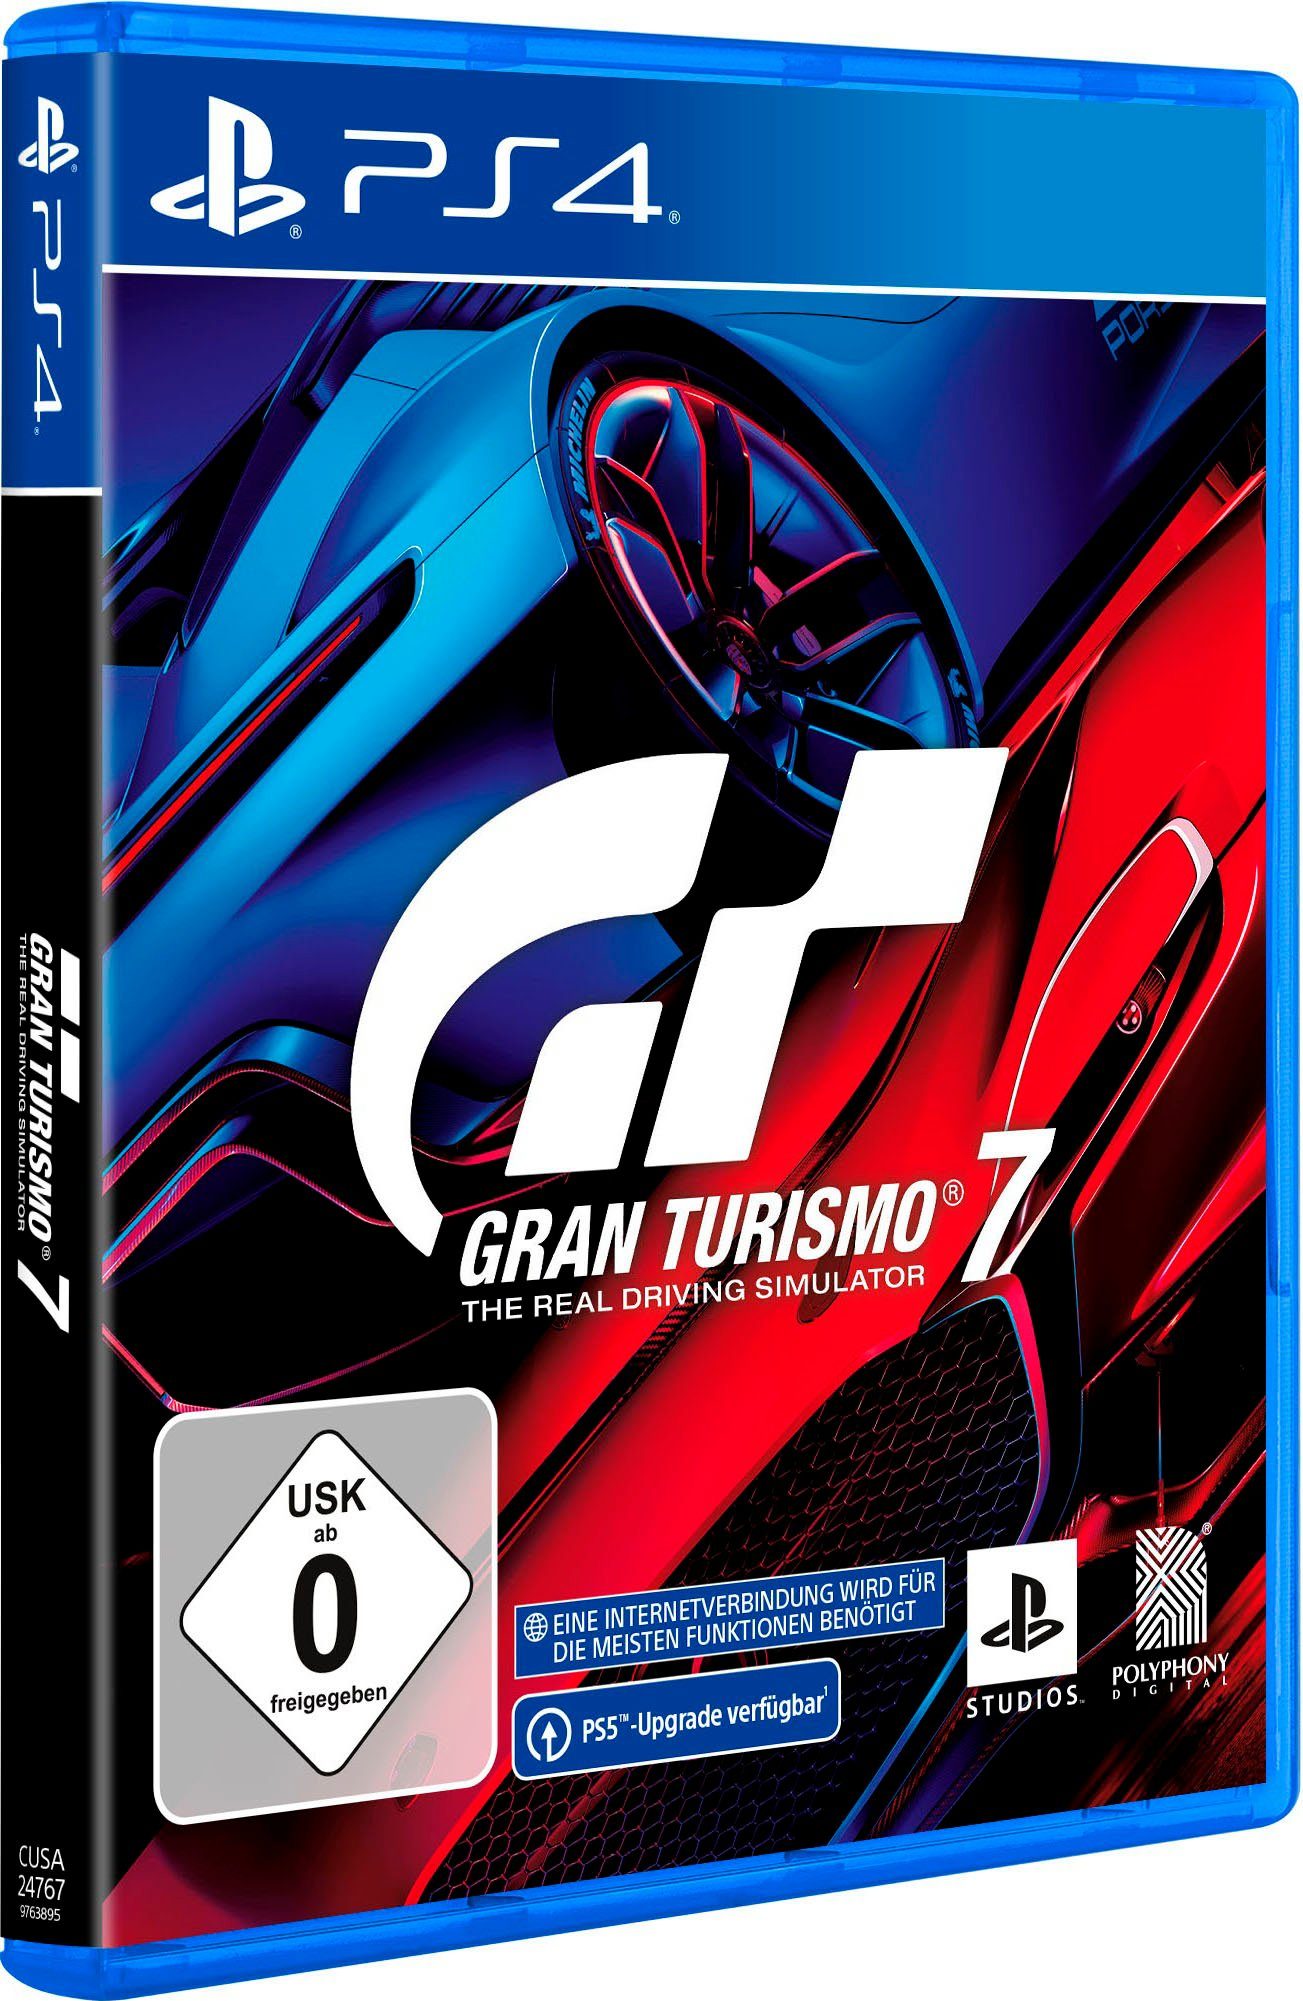 Sony 7 PlayStation Turismo Gran 4